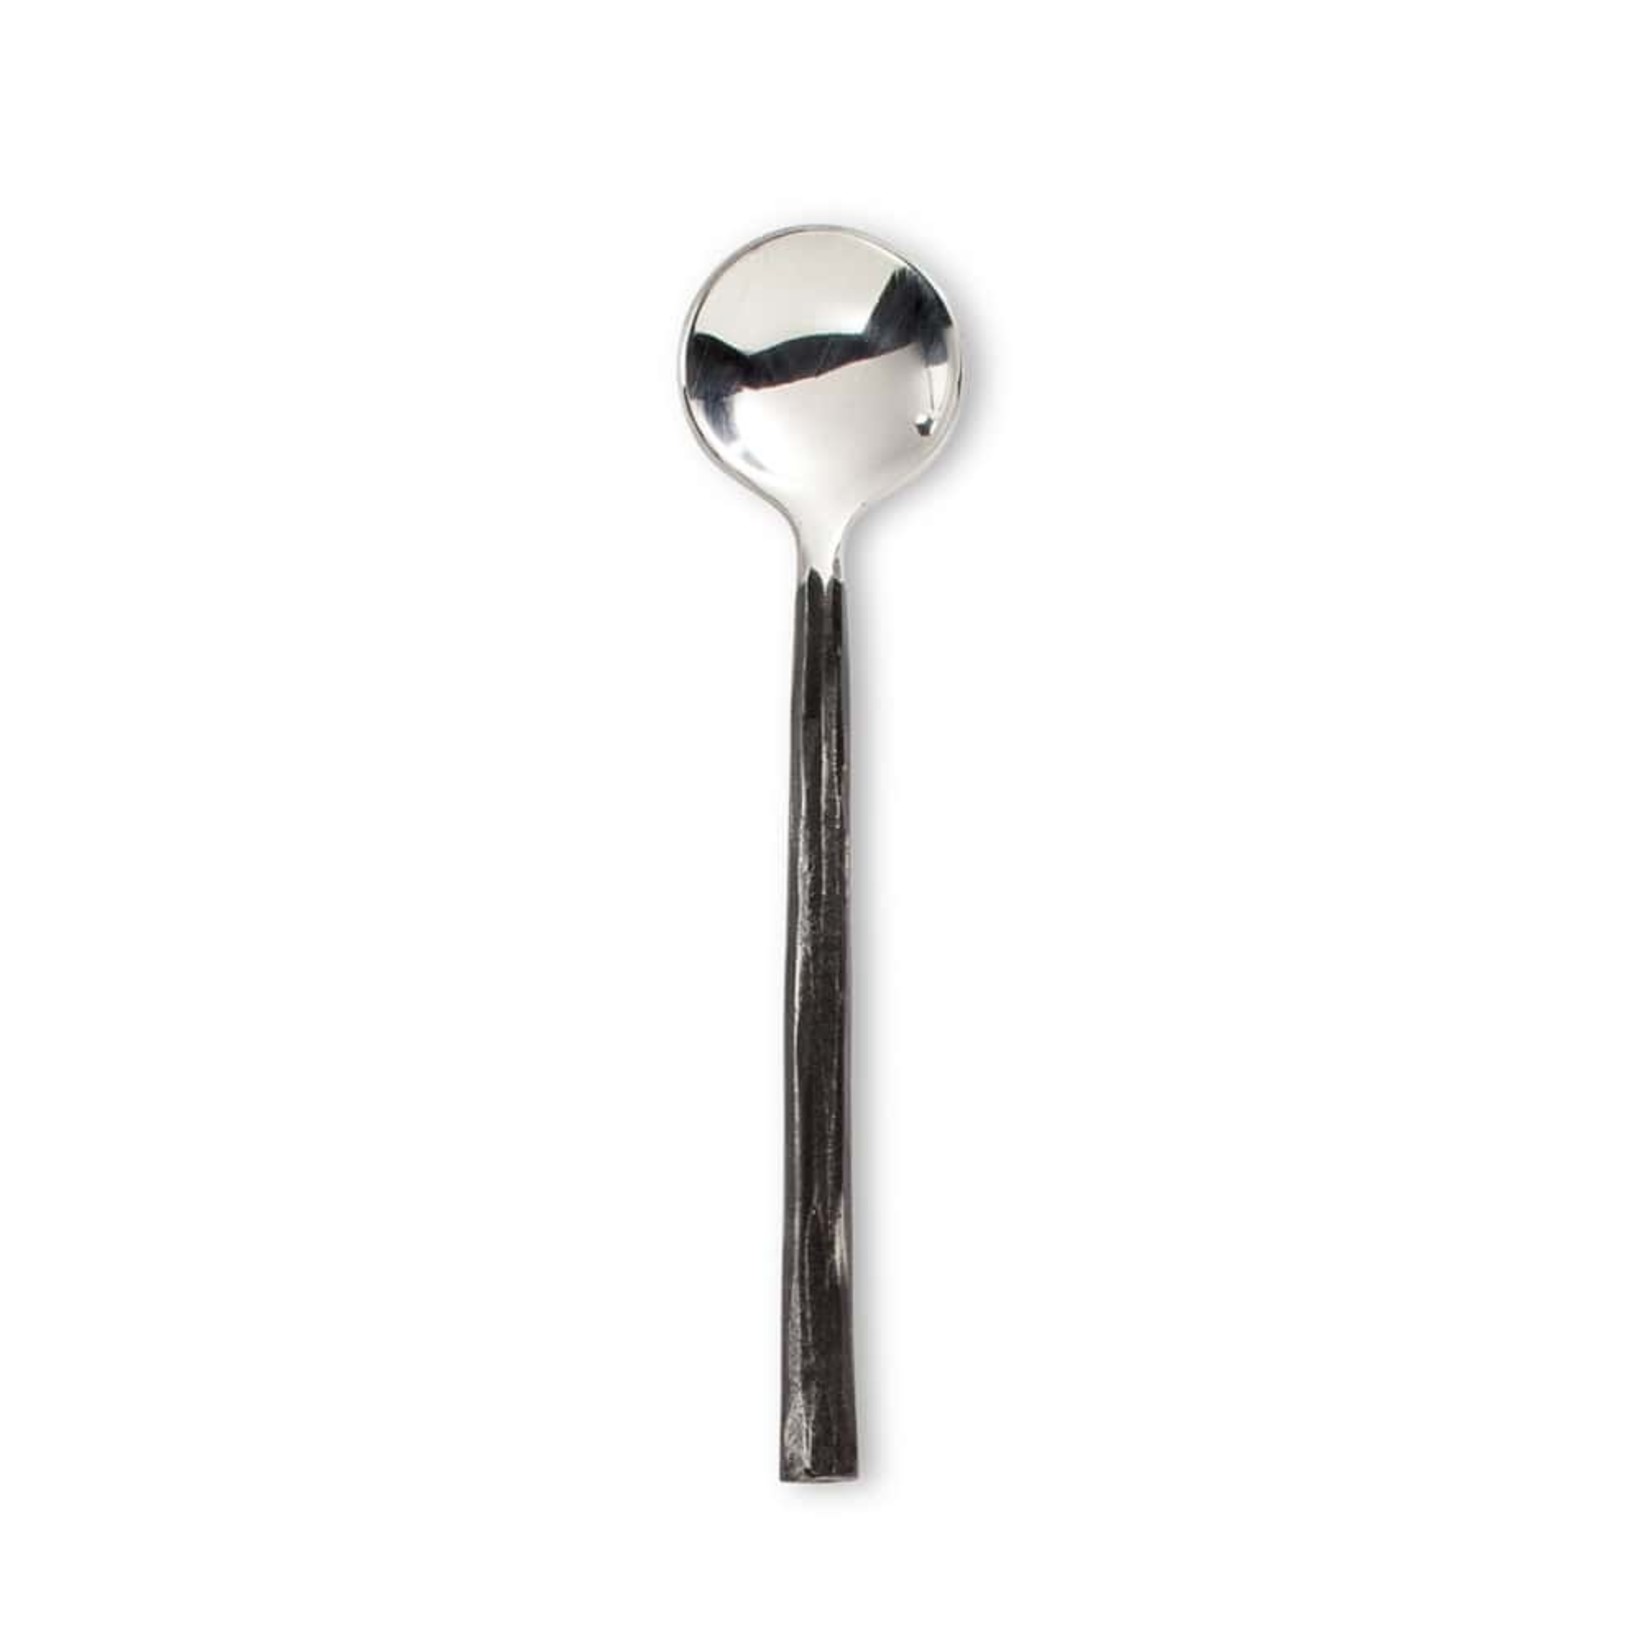 ABBOTT ABBOTT Small Spoon 4.5" -  Iron DNR